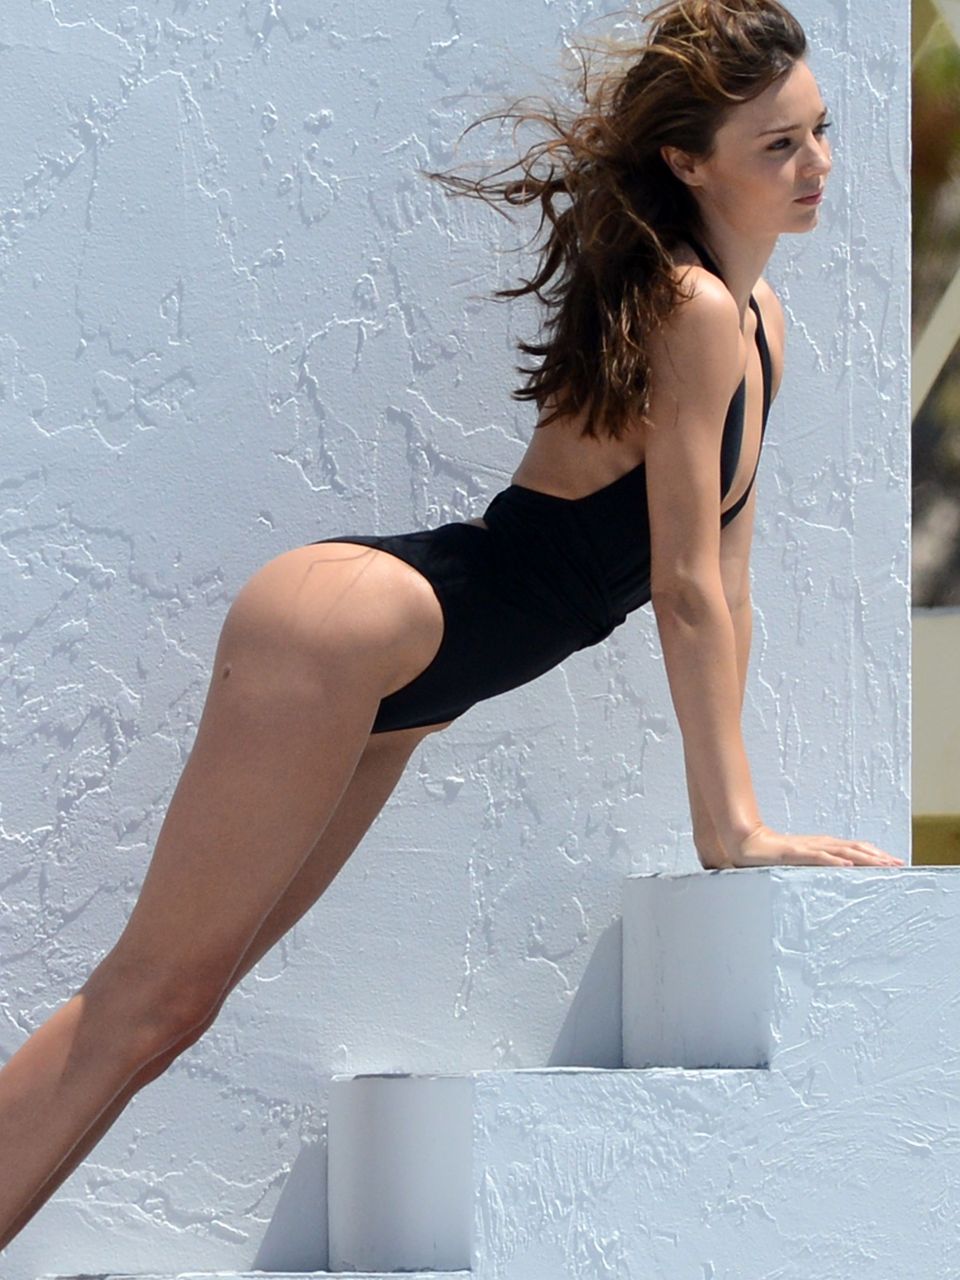 Miranda Kerr - seksowna modelka topless w sesji w strojach kąpielowych